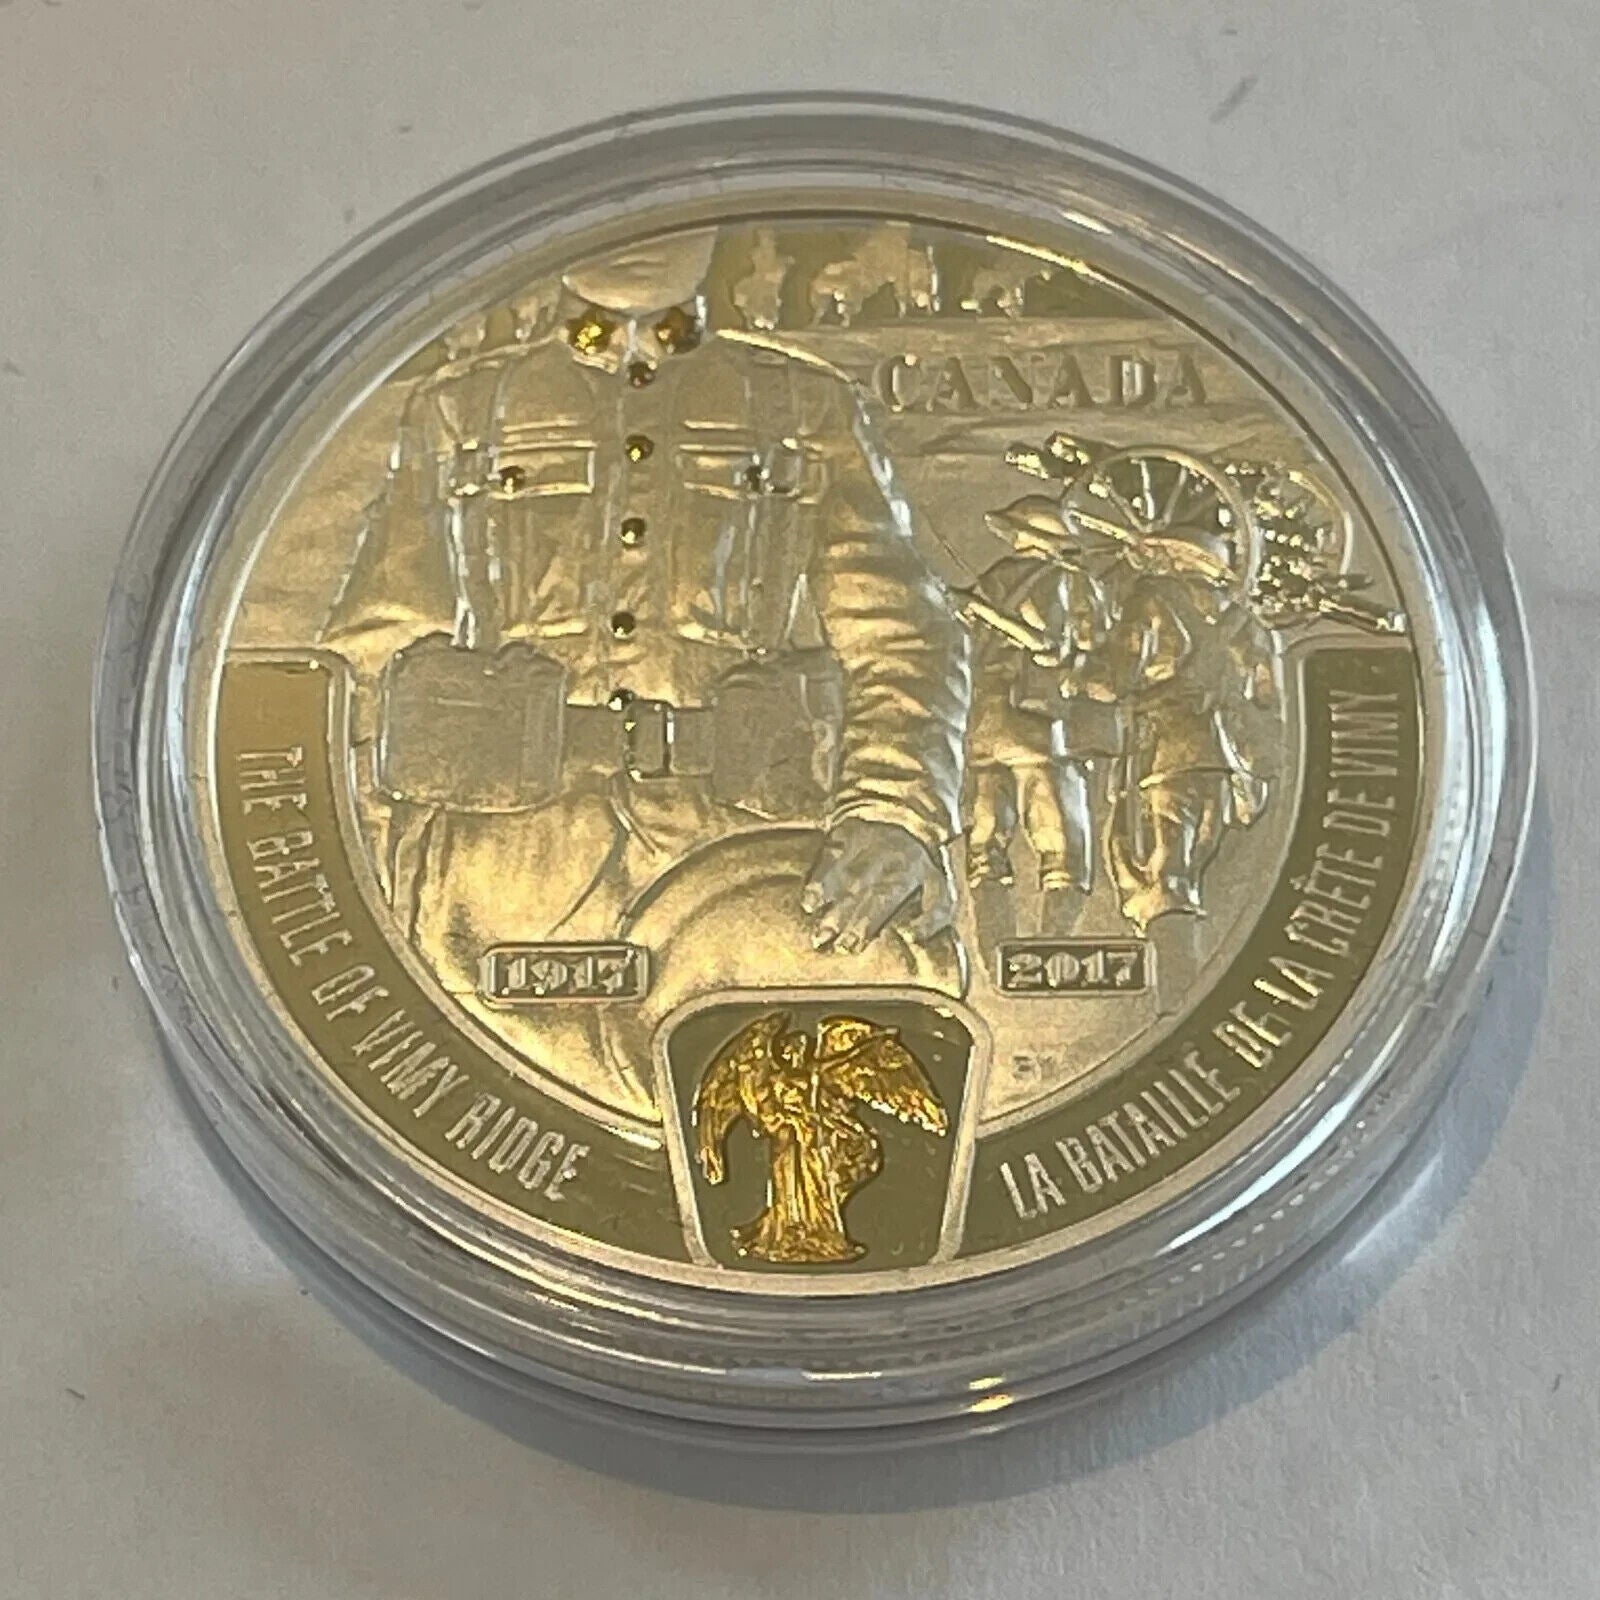 1 Oz Silver Coin 2017 Canada $20 WW1 Battlefront Series: Battle of Vimy Ridge-classypw.com-6